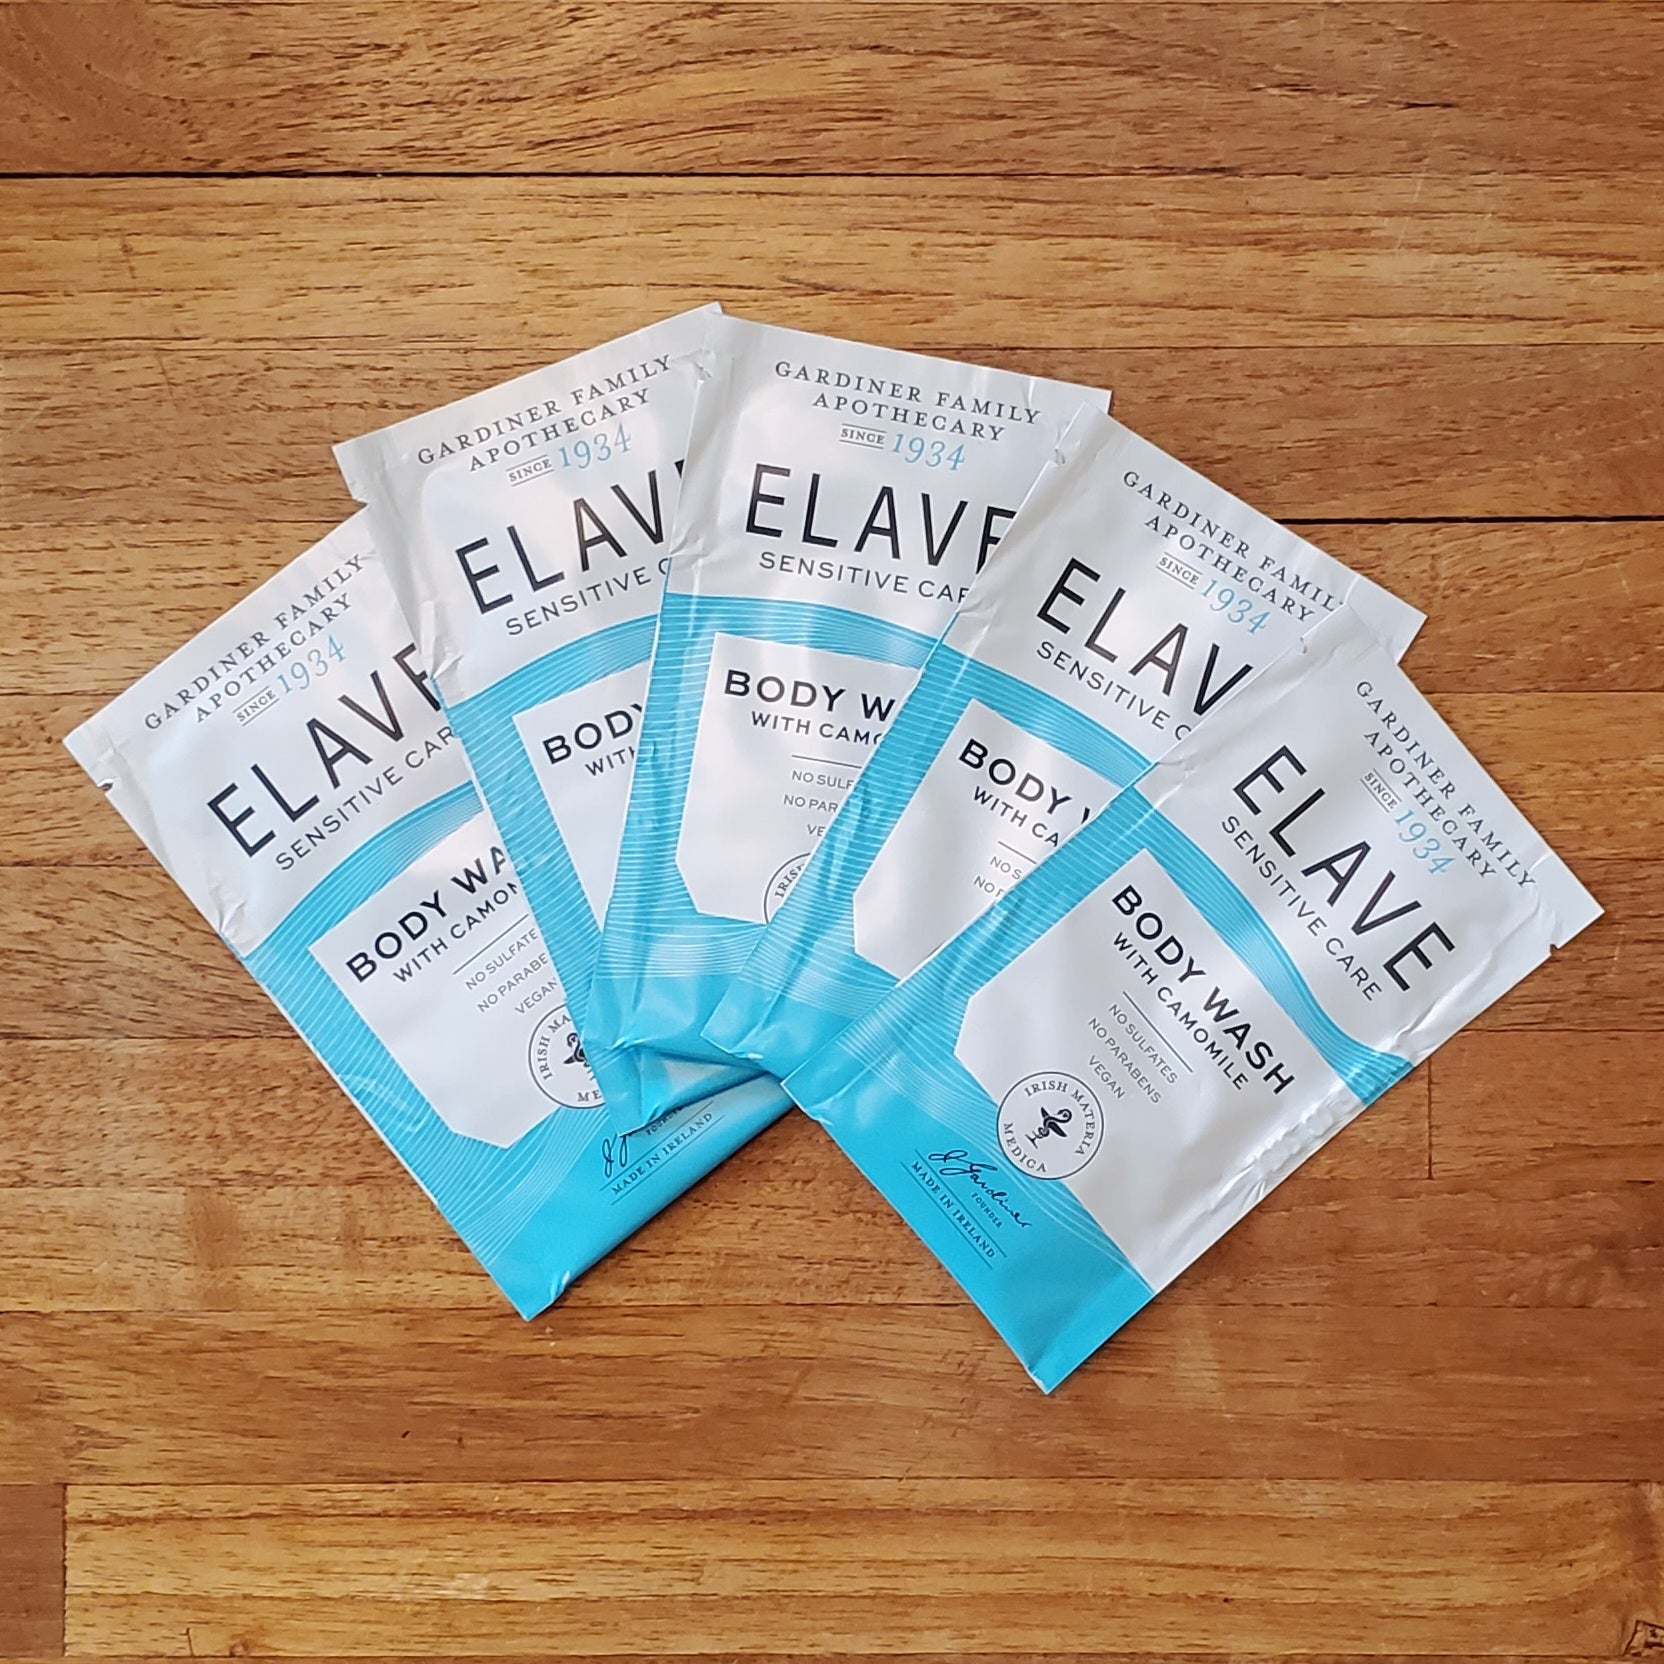 Elave Body Wash Sample Sachets (Reward)